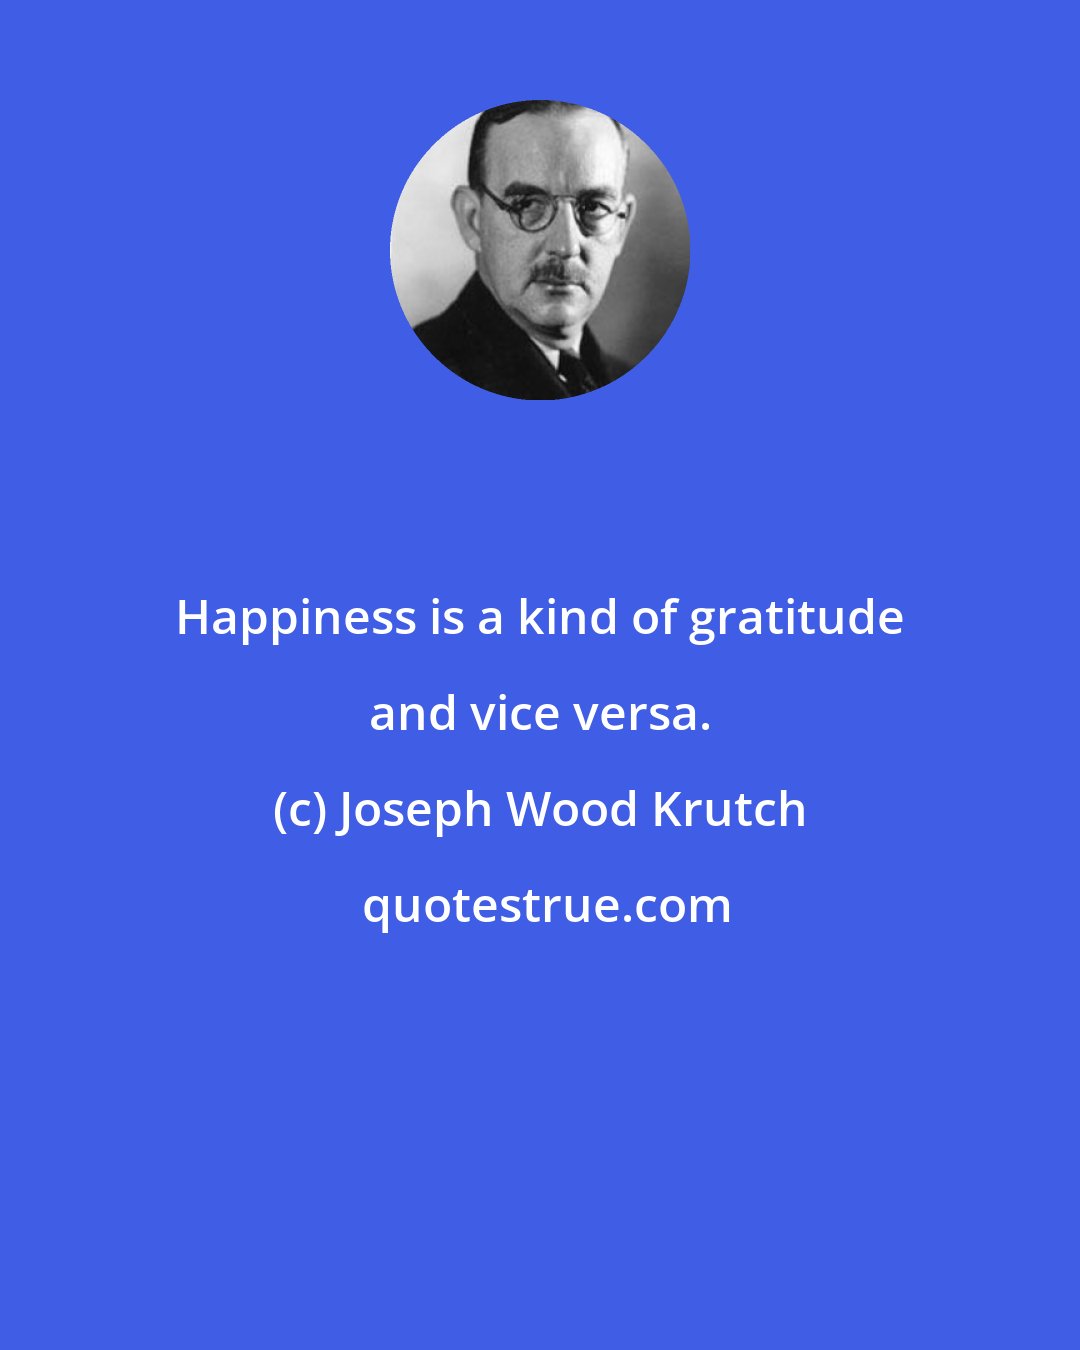 Joseph Wood Krutch: Happiness is a kind of gratitude and vice versa.